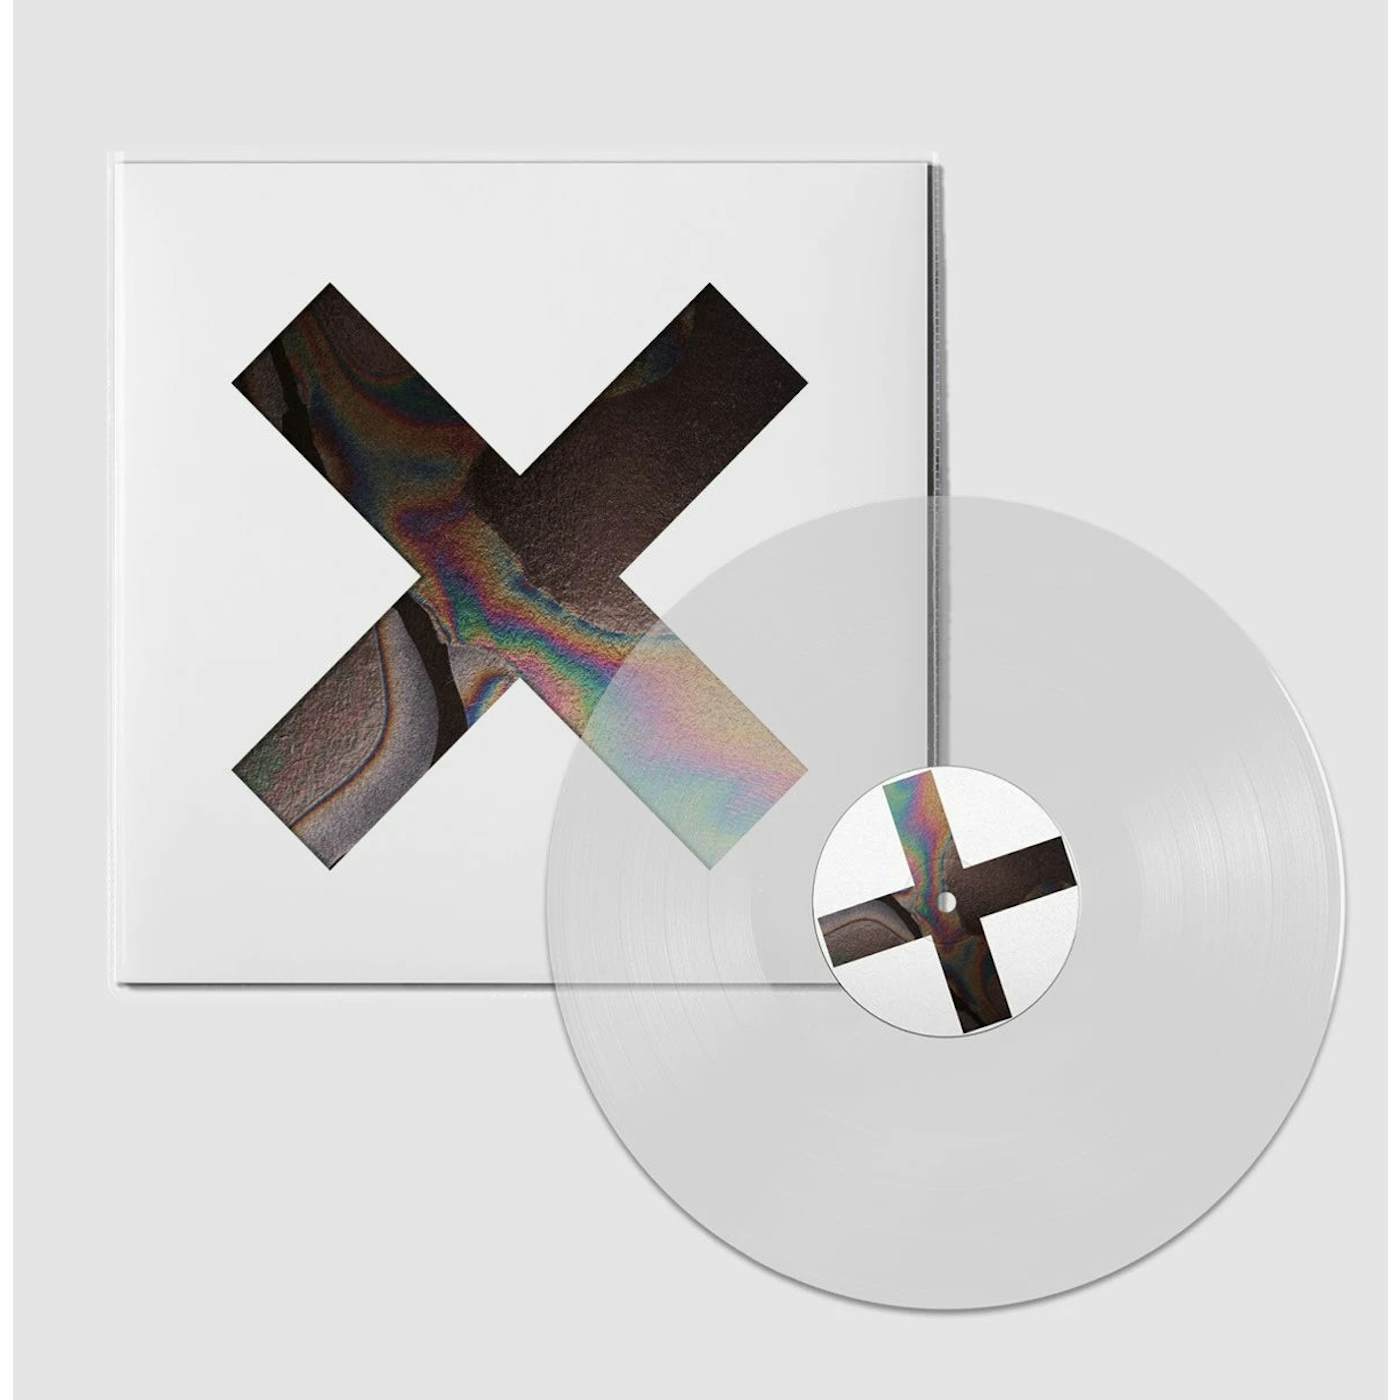 The xx - Coexist (10th Anniversary)